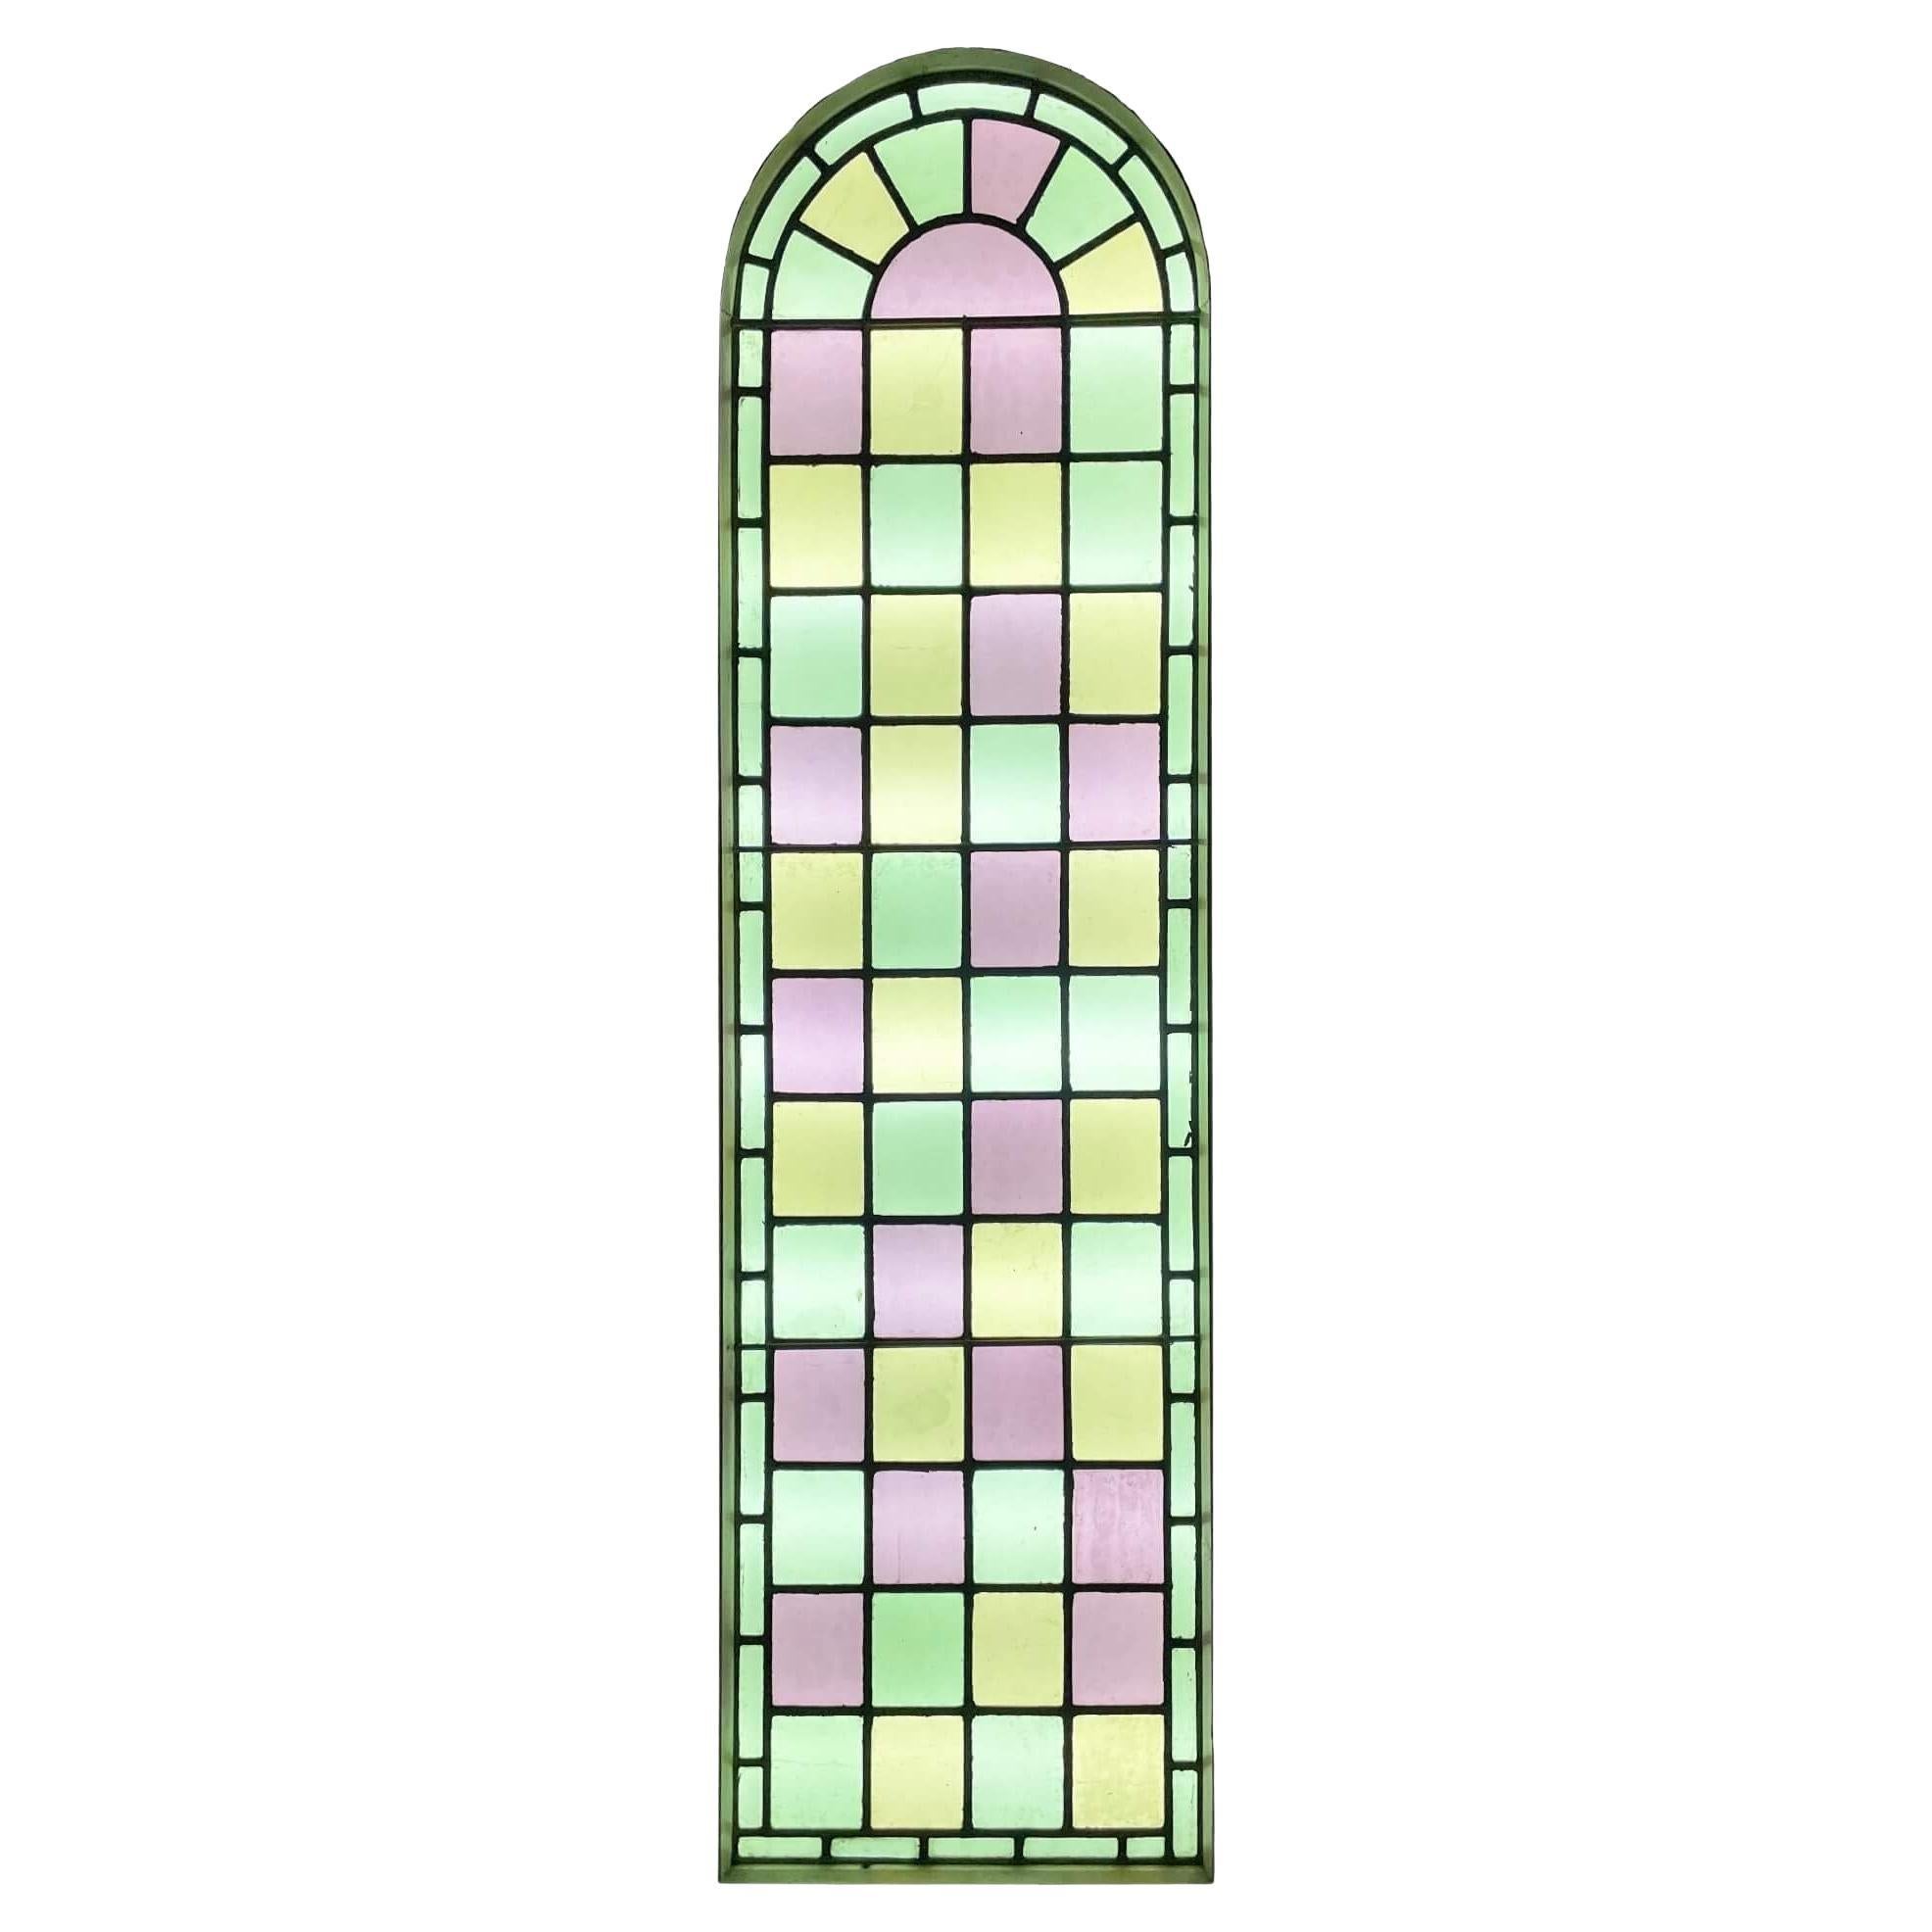 Großes Chapel-Fenster aus aufgearbeitetem Buntglas